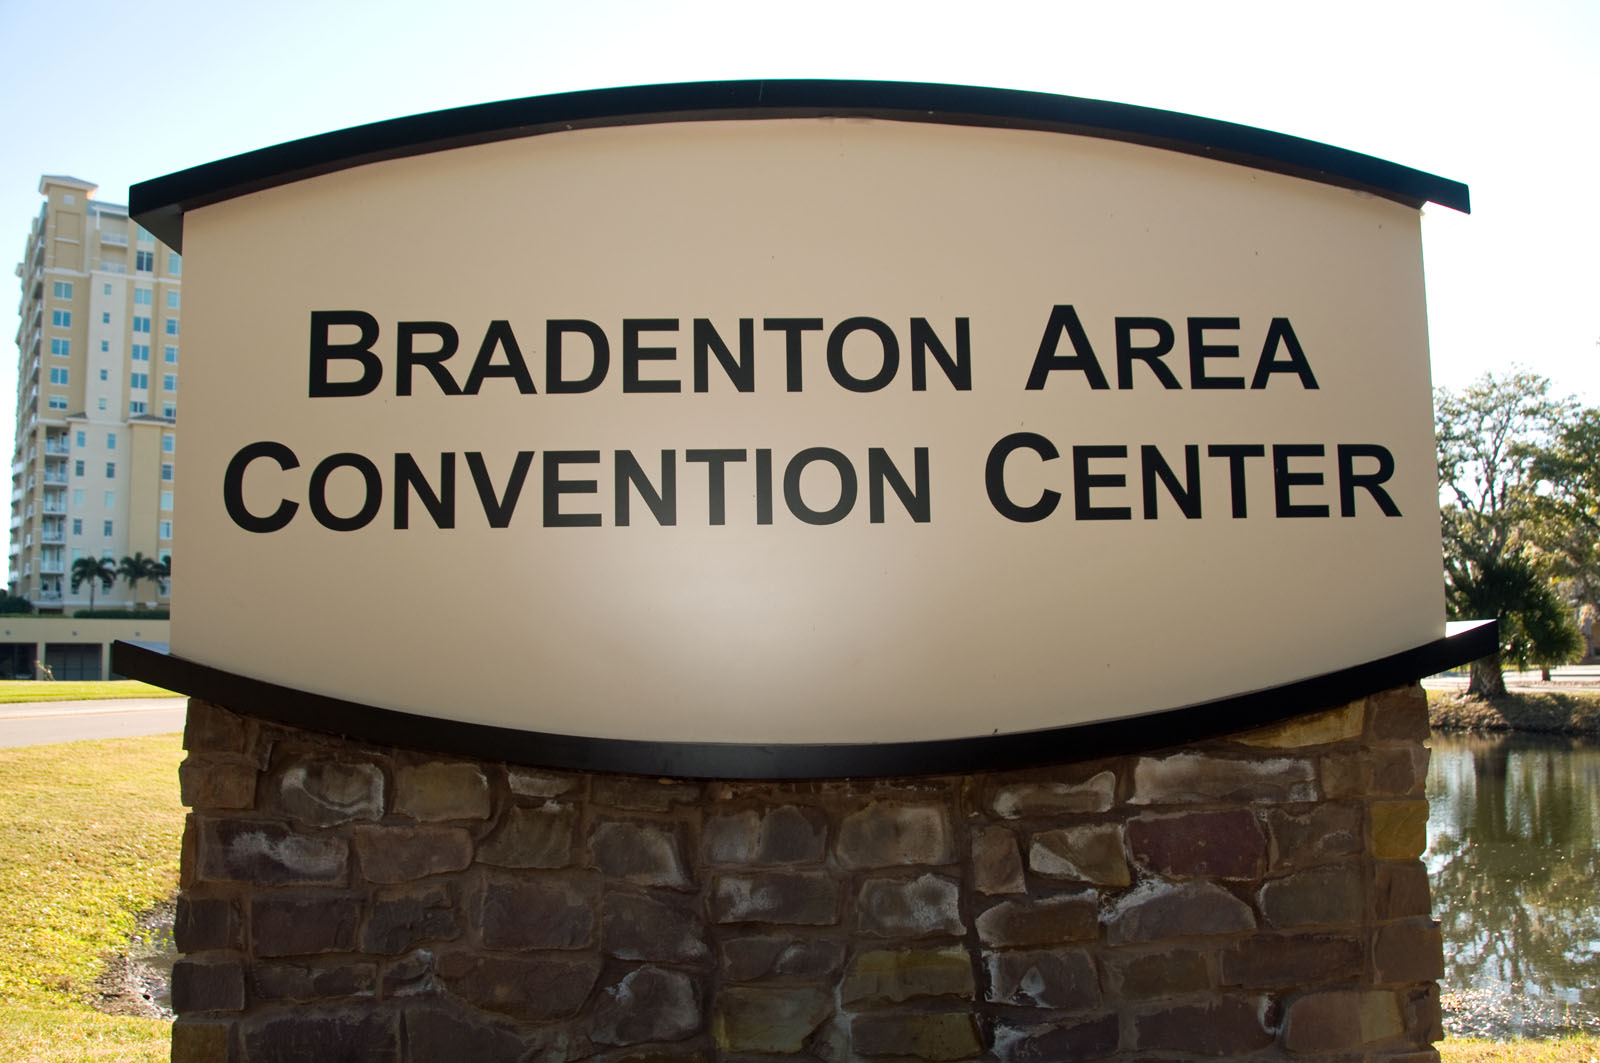 Bradenton Area Convention Center | MAGEE SIGNS